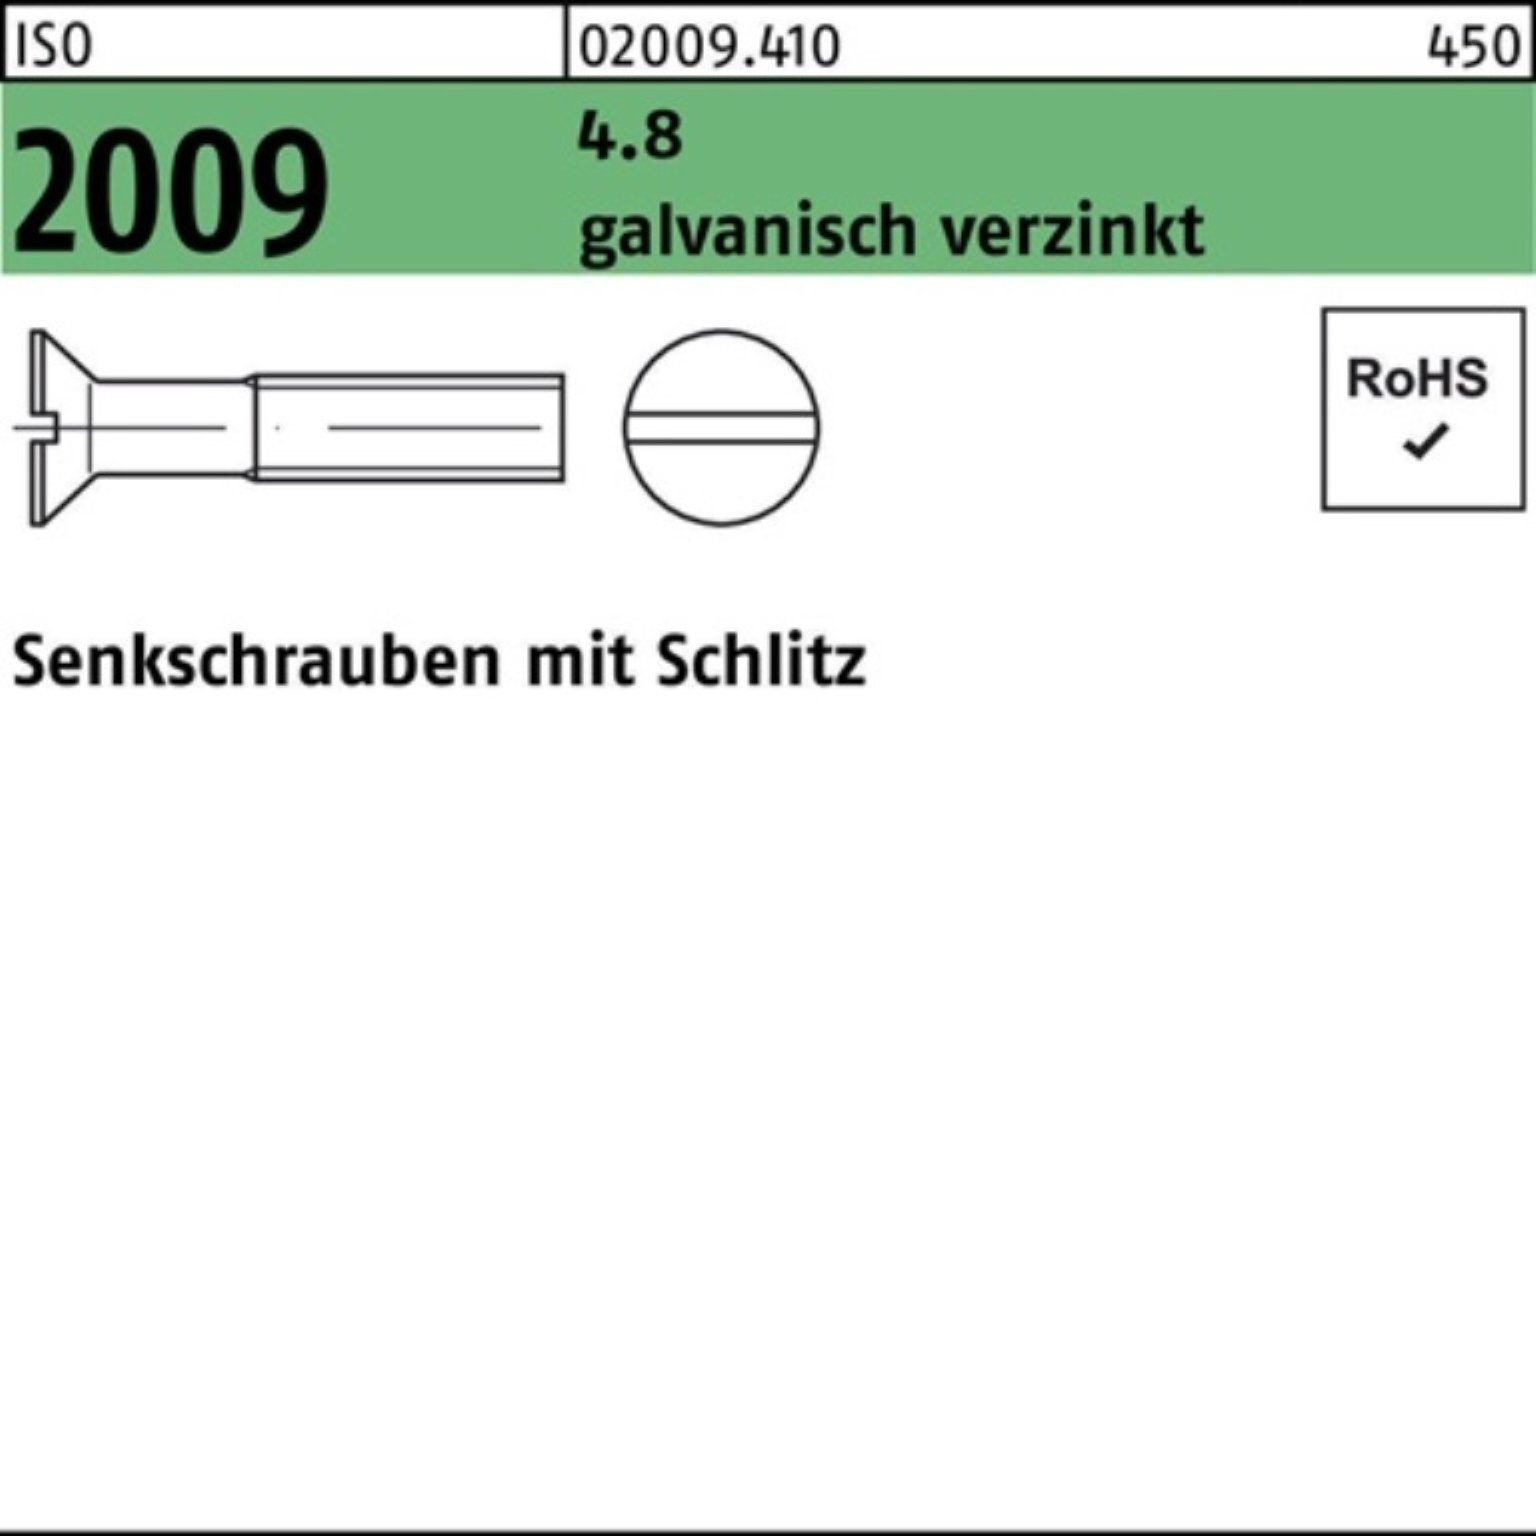 200 Pack galv.verz. M3x 2009 200er St 50 Senkschraube Senkschraube Schlitz 4.8 ISO Reyher